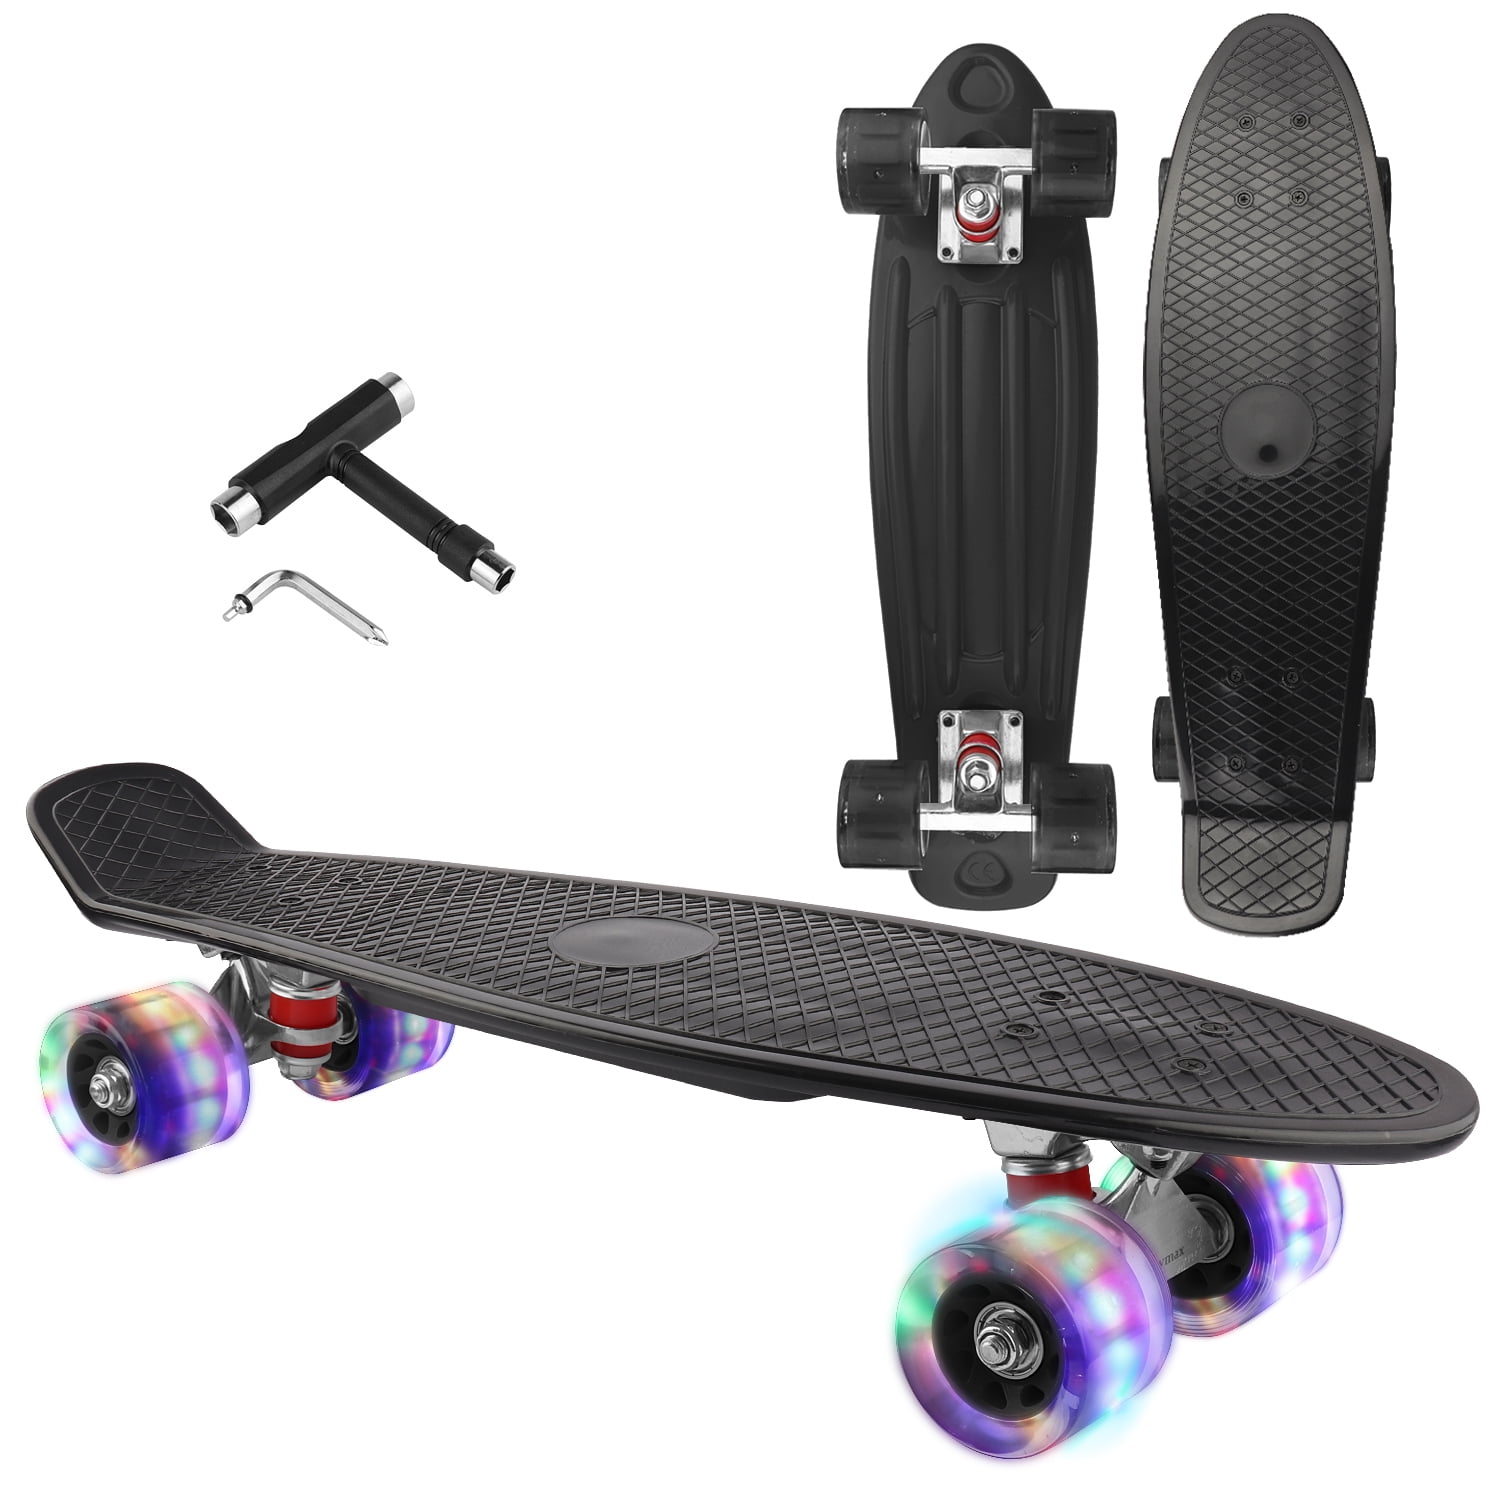 LED Light up Wheels with All-in-One Skate T-Tool for Beginners N/Z Cruiser Retro Skateboard for Beginner Kids Teens Adults 